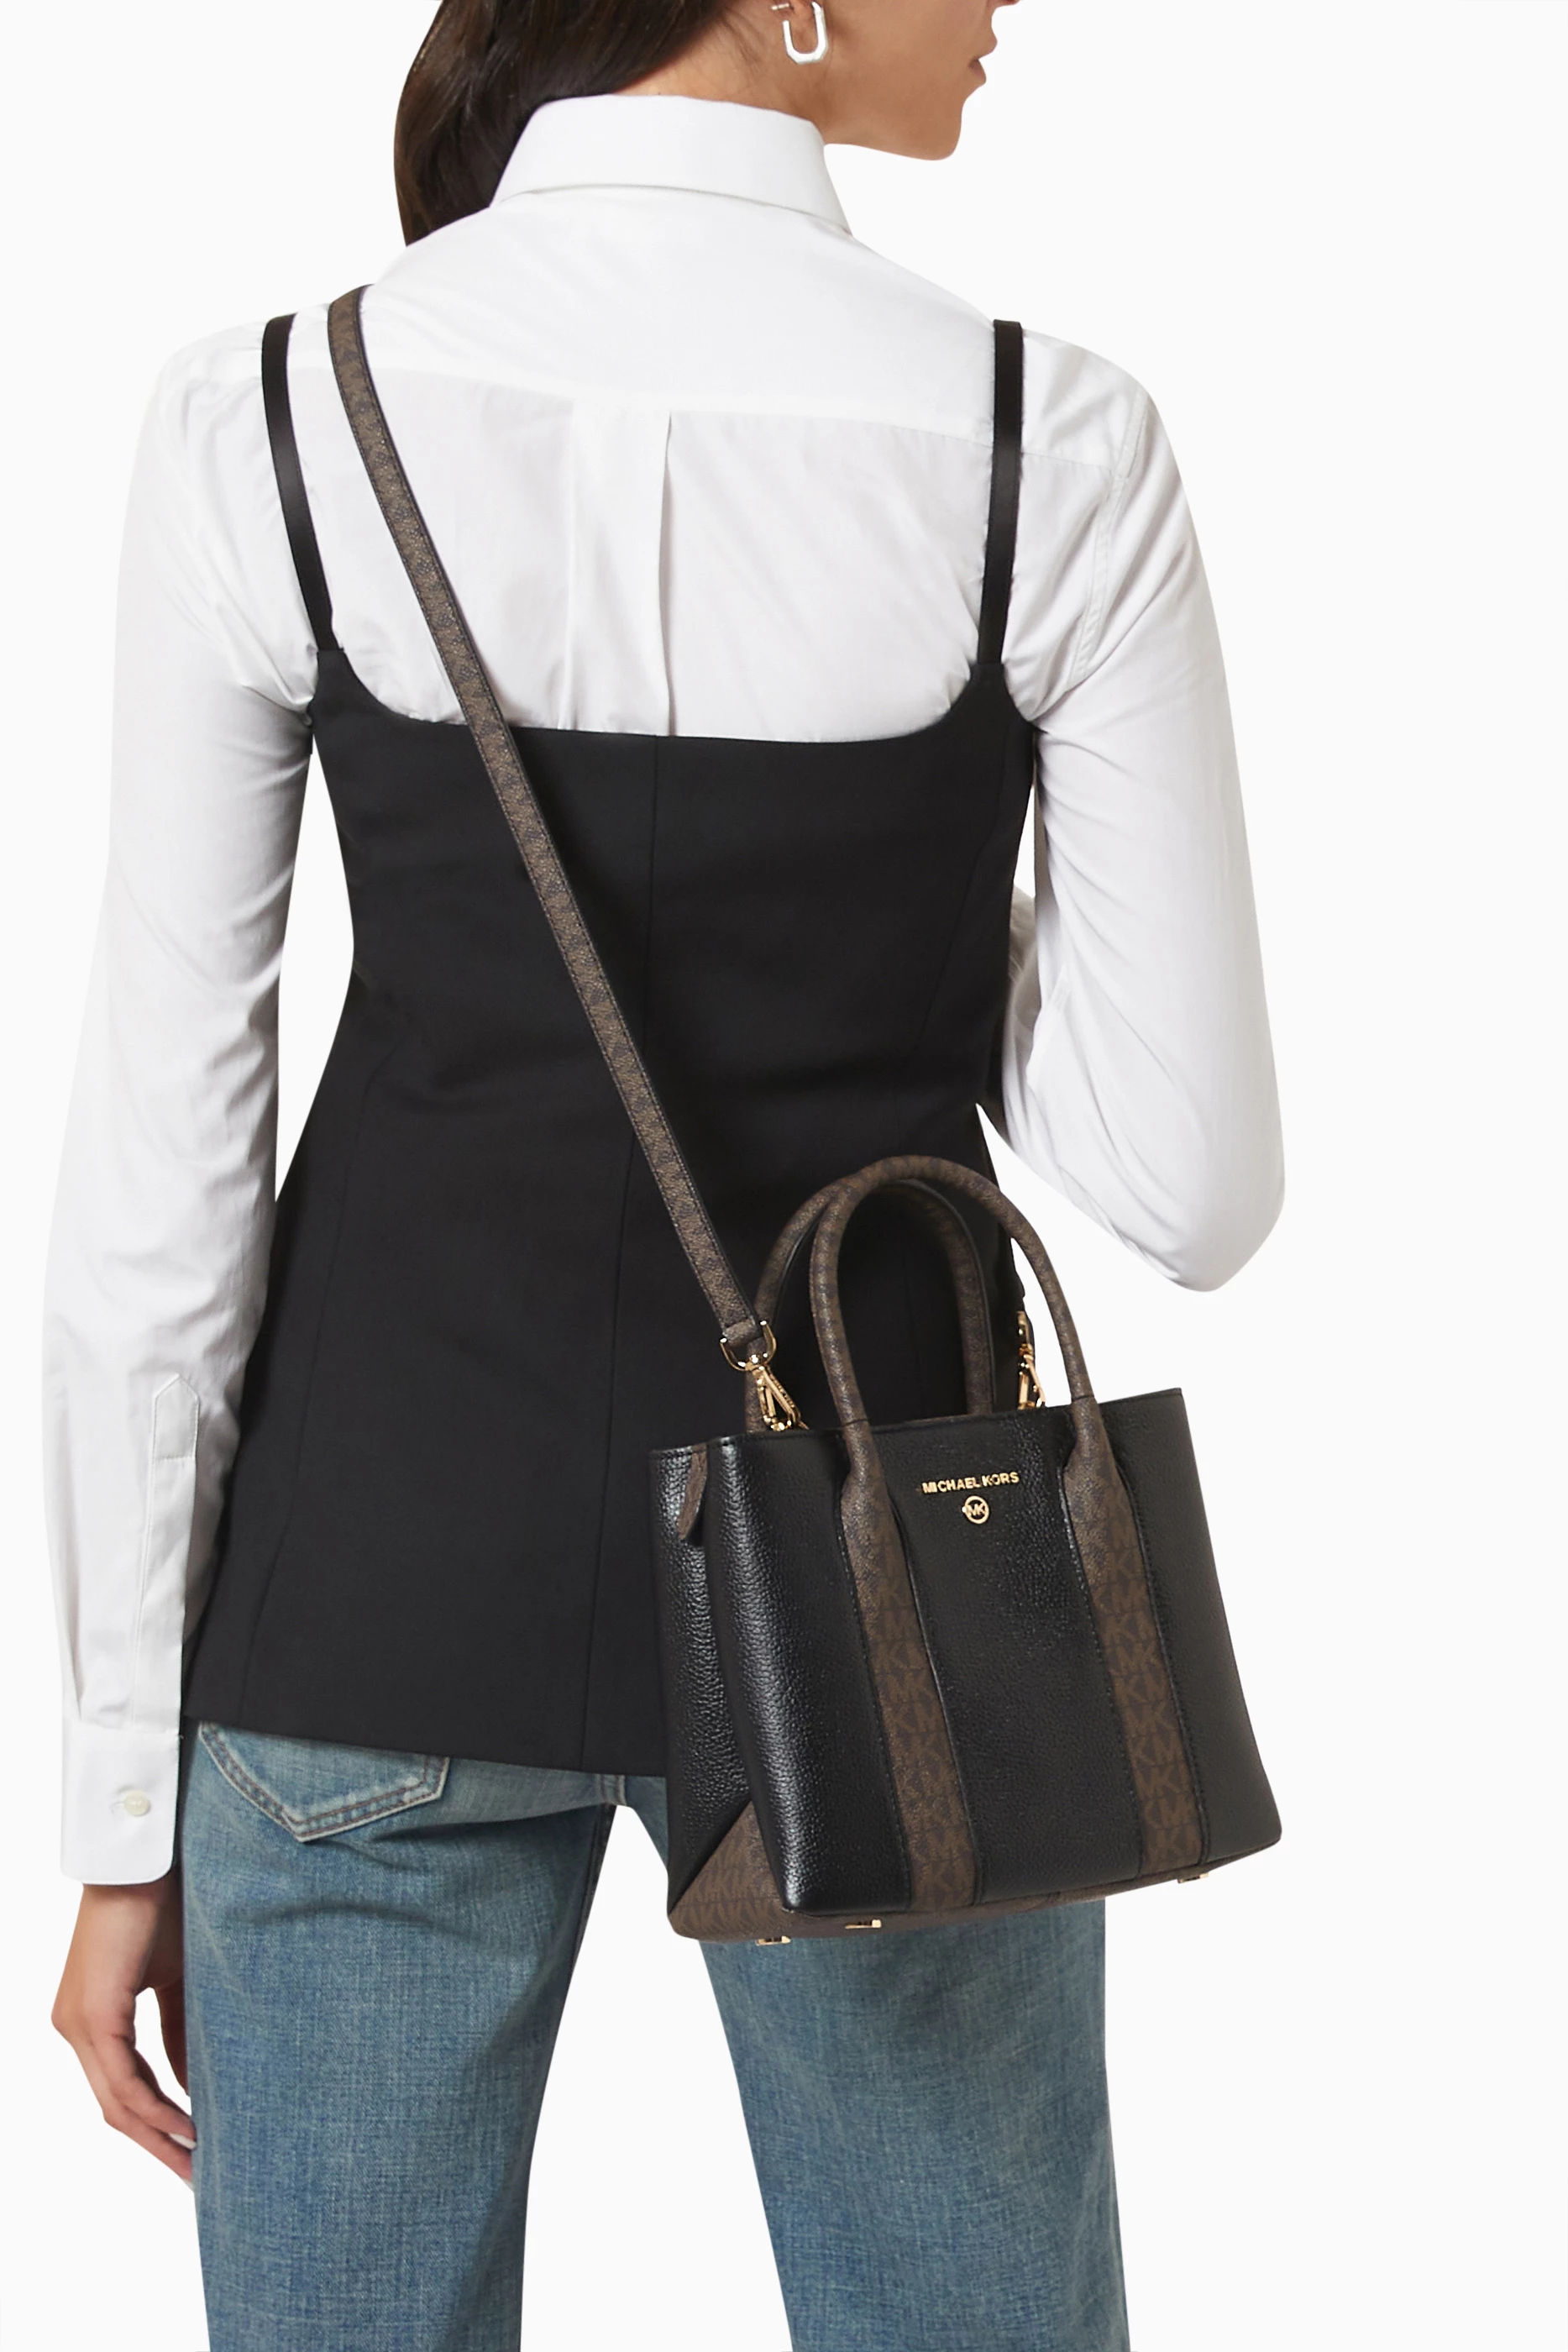 Shop Michael Kors Black Medium Austin Messenger Bag in Leather for WOMEN |  Ounass Saudi Arabia